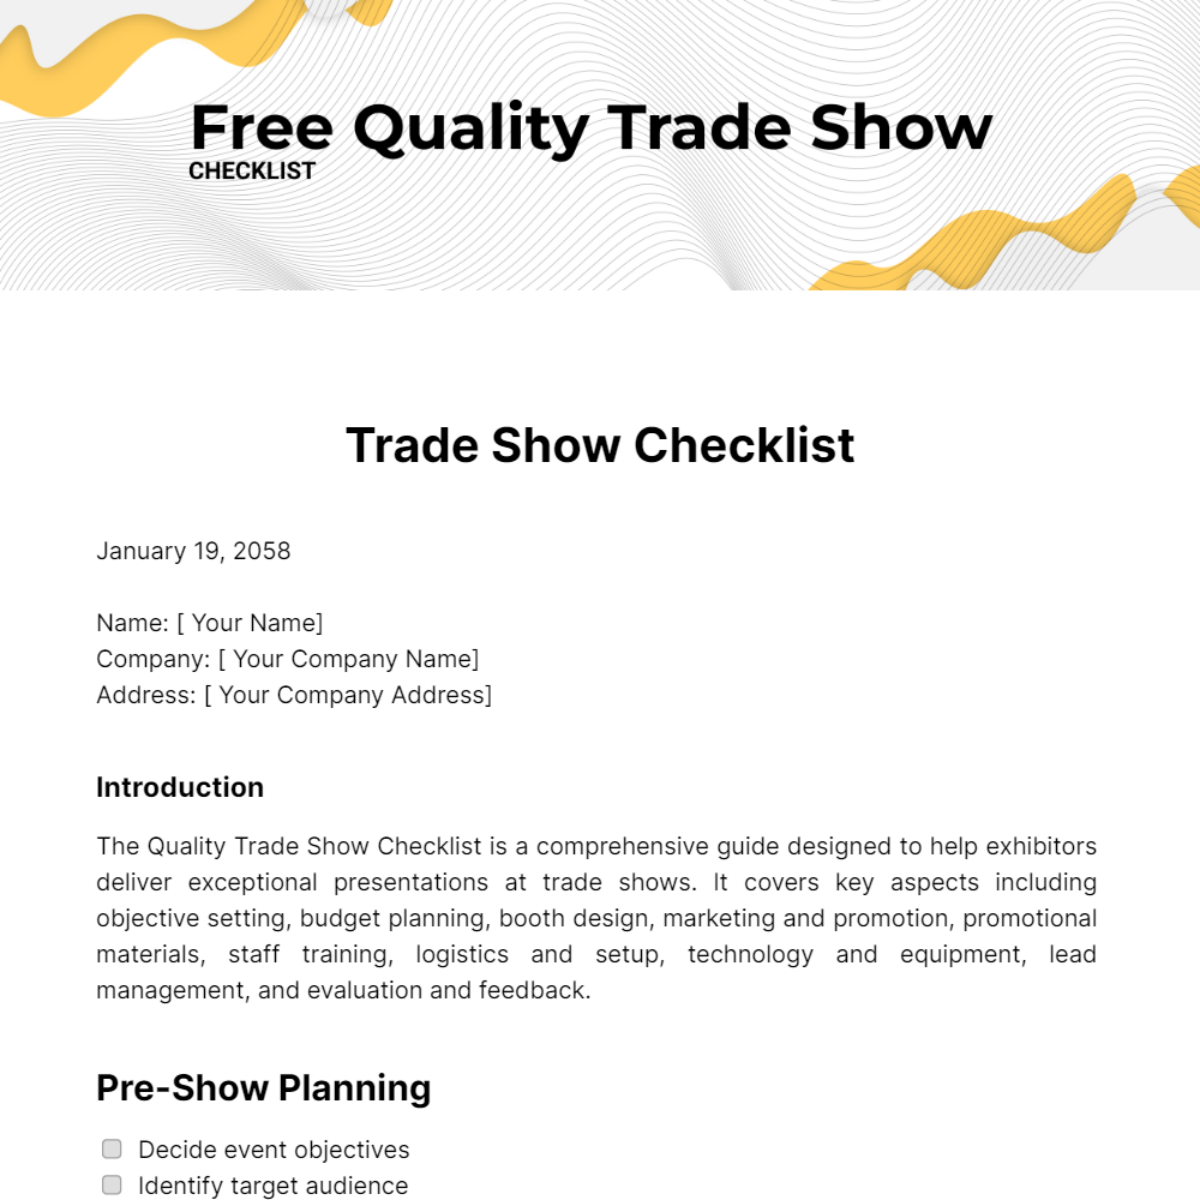 Free Quality Trade Show Checklist Template